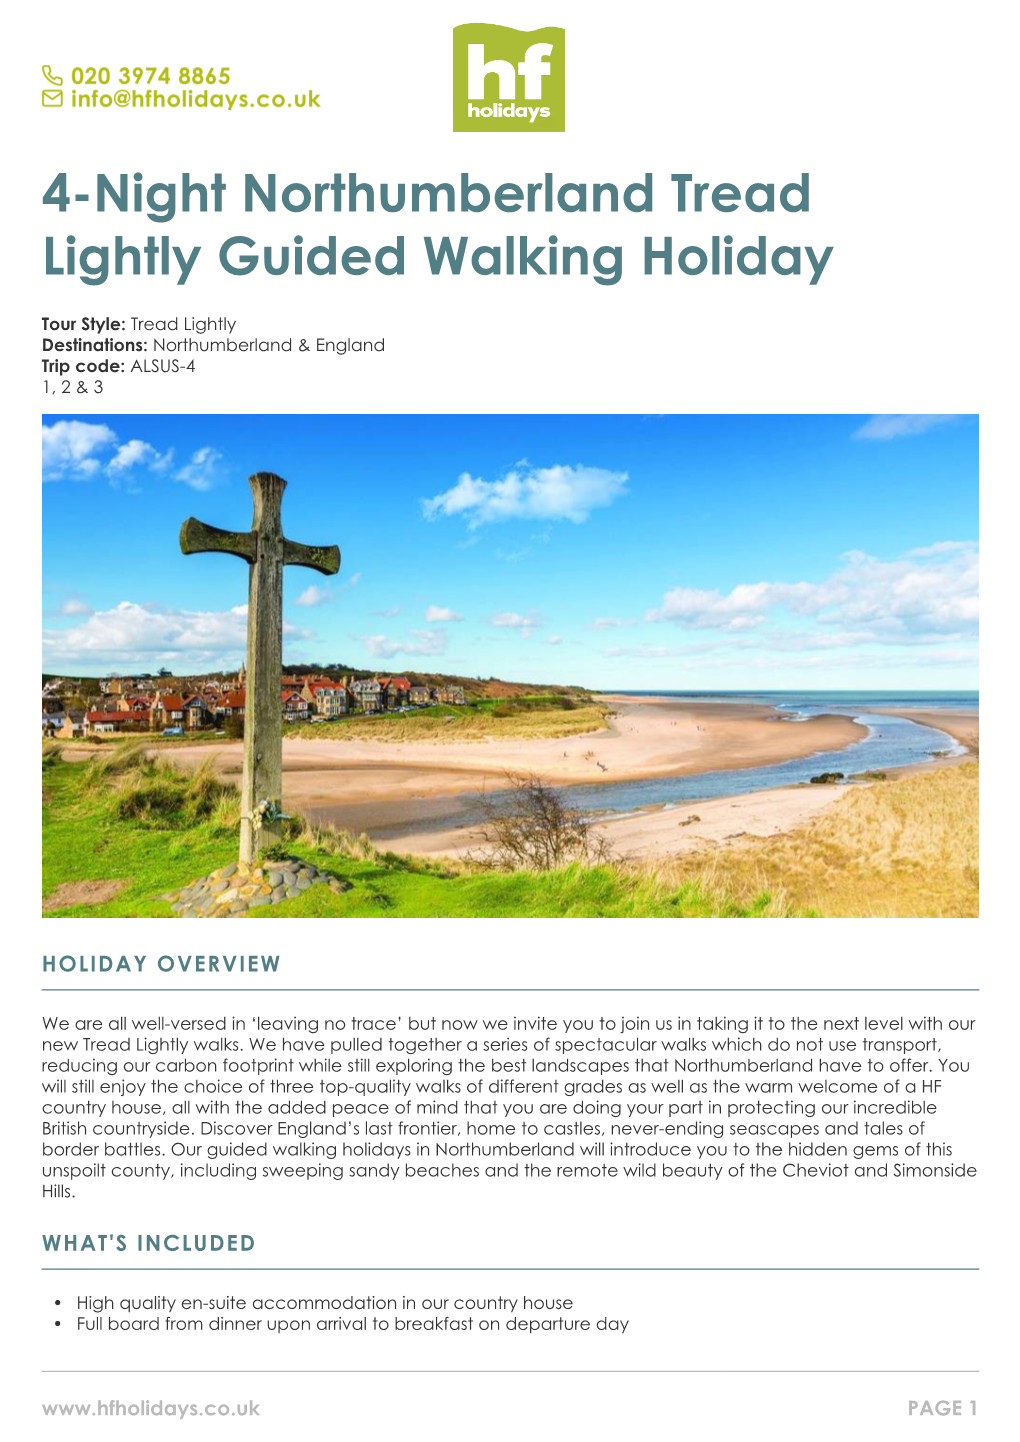 4-Night Northumberland Tread Lightly Guided Walking Holiday